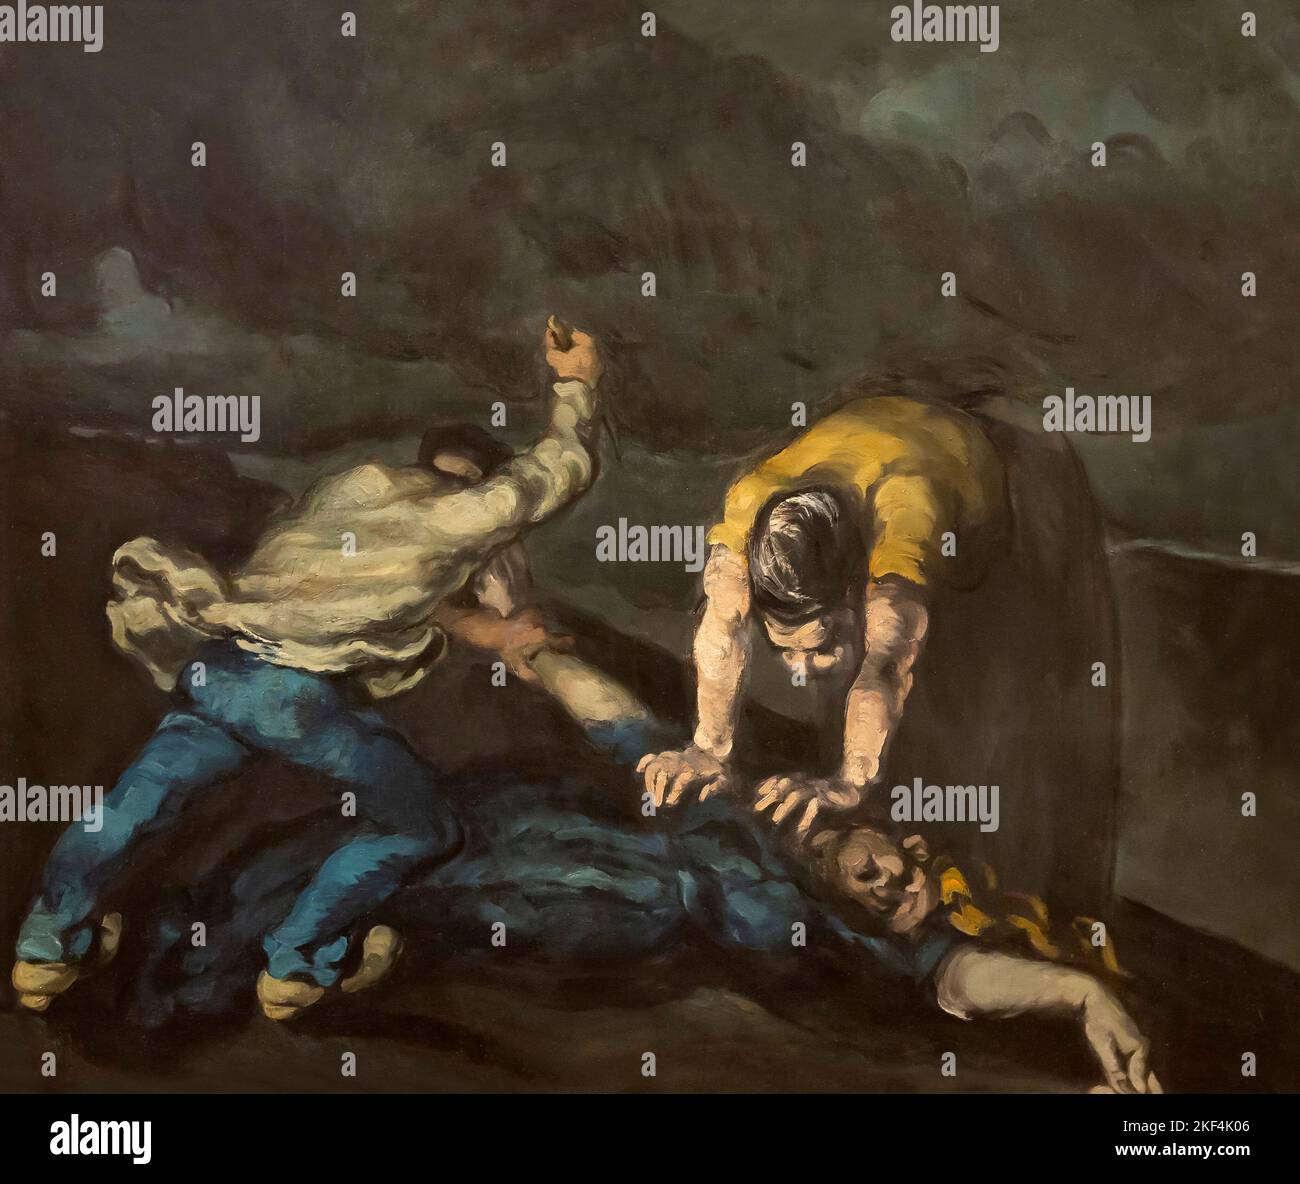 Le meurtre, Paul Cezanne, vers 1870, Walker Art Gallery, Liverpool, Angleterre, Royaume-Uni, Europe Banque D'Images